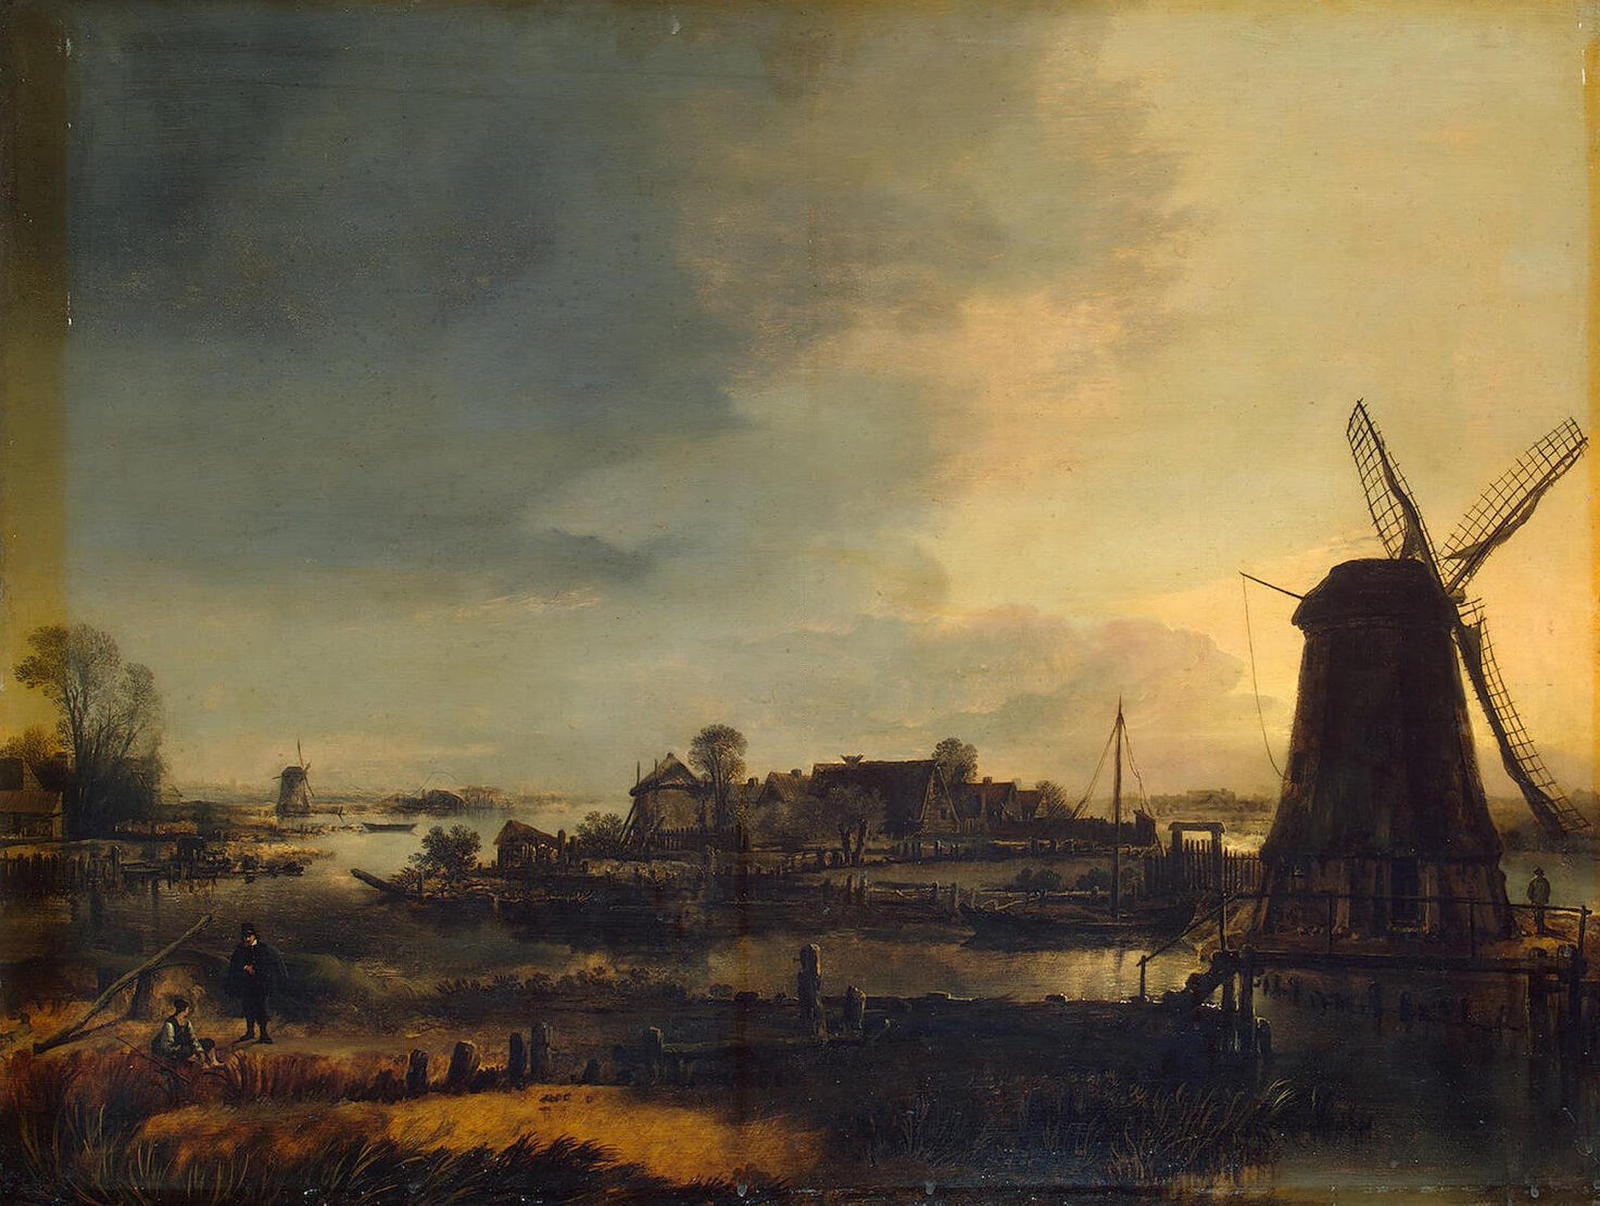 Landscape with Windmill by Aert van der Neer